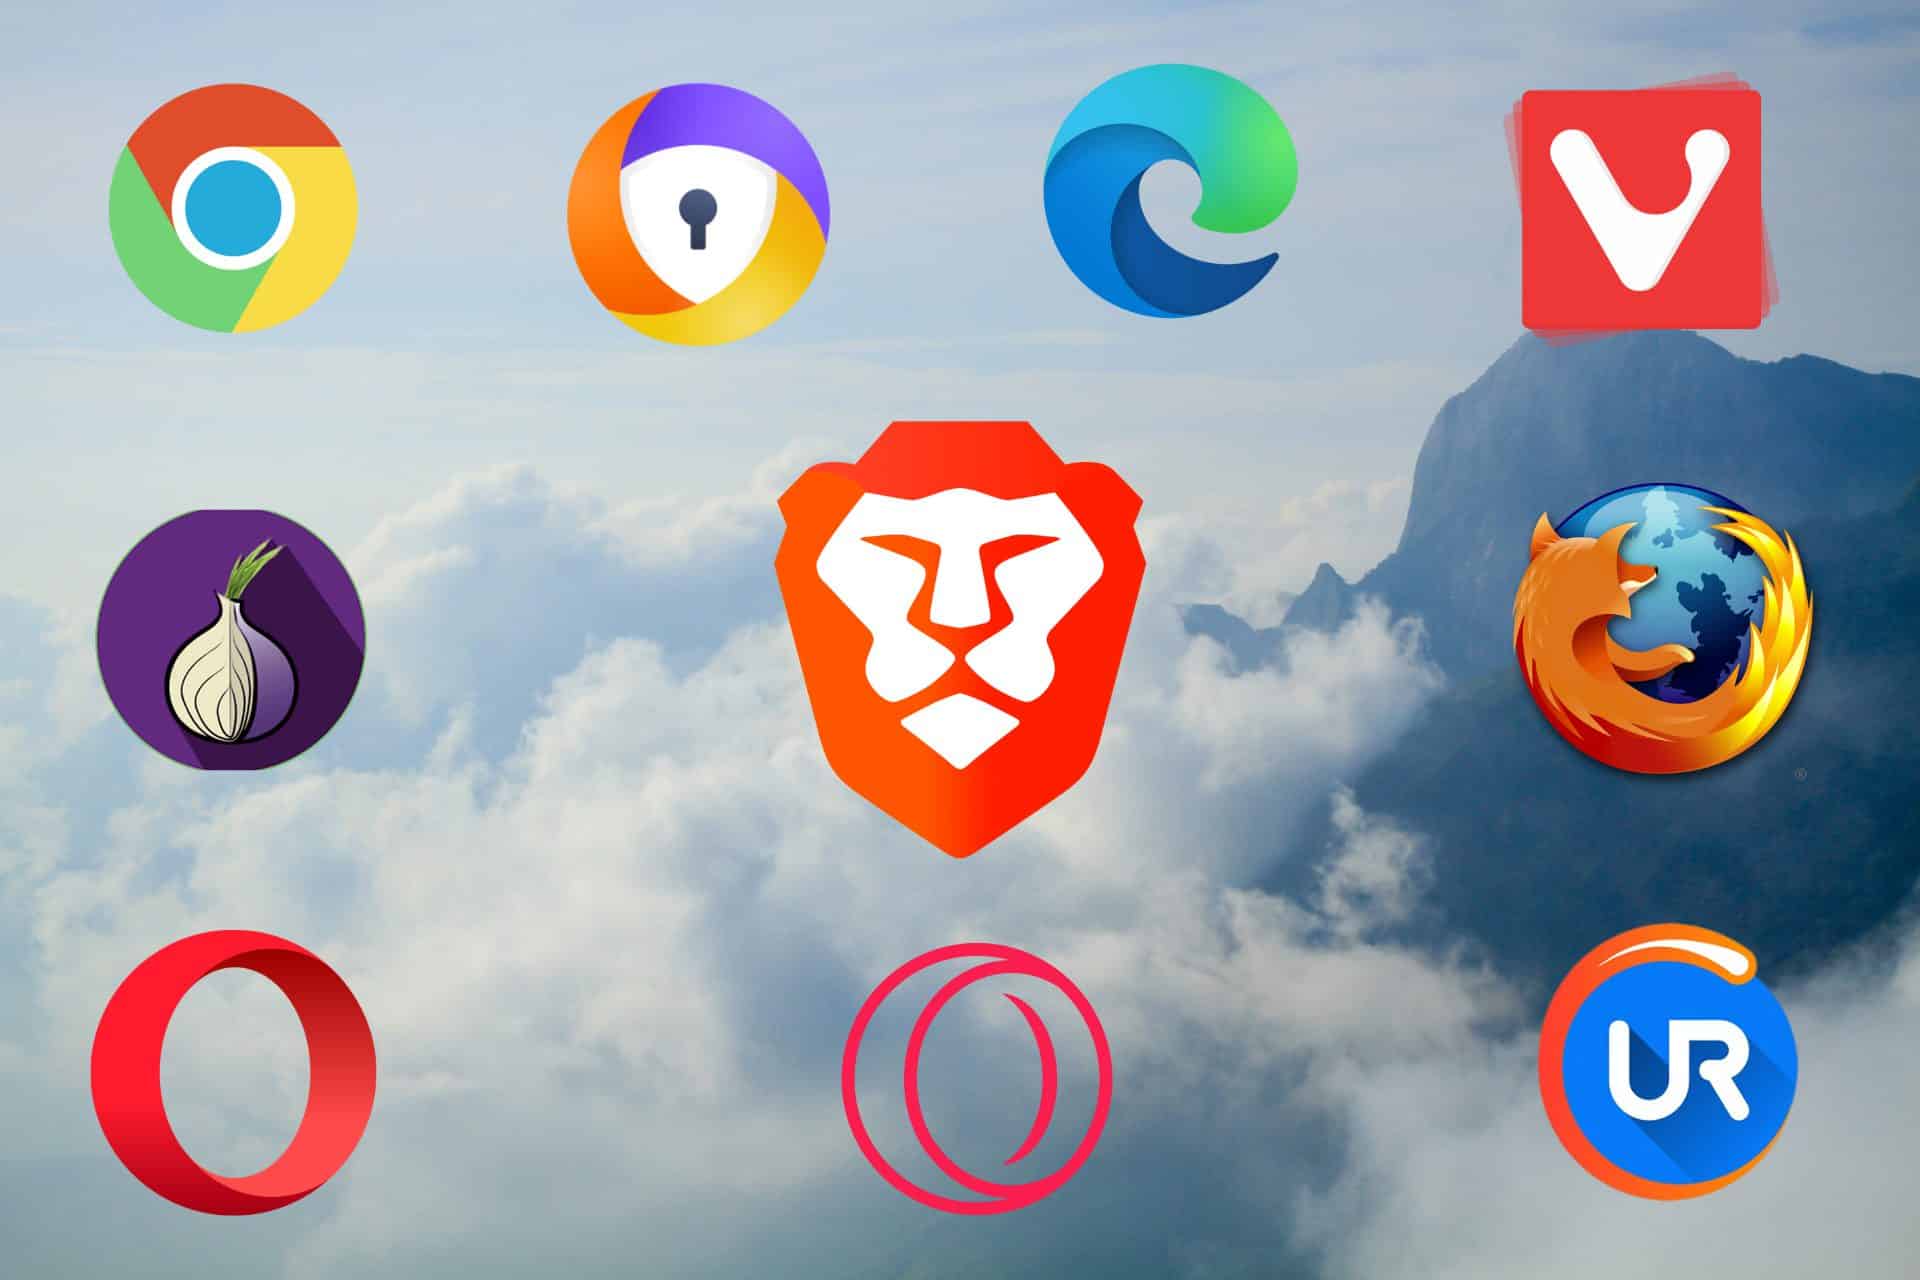 Microsoft edge browser brand logo symbol with name